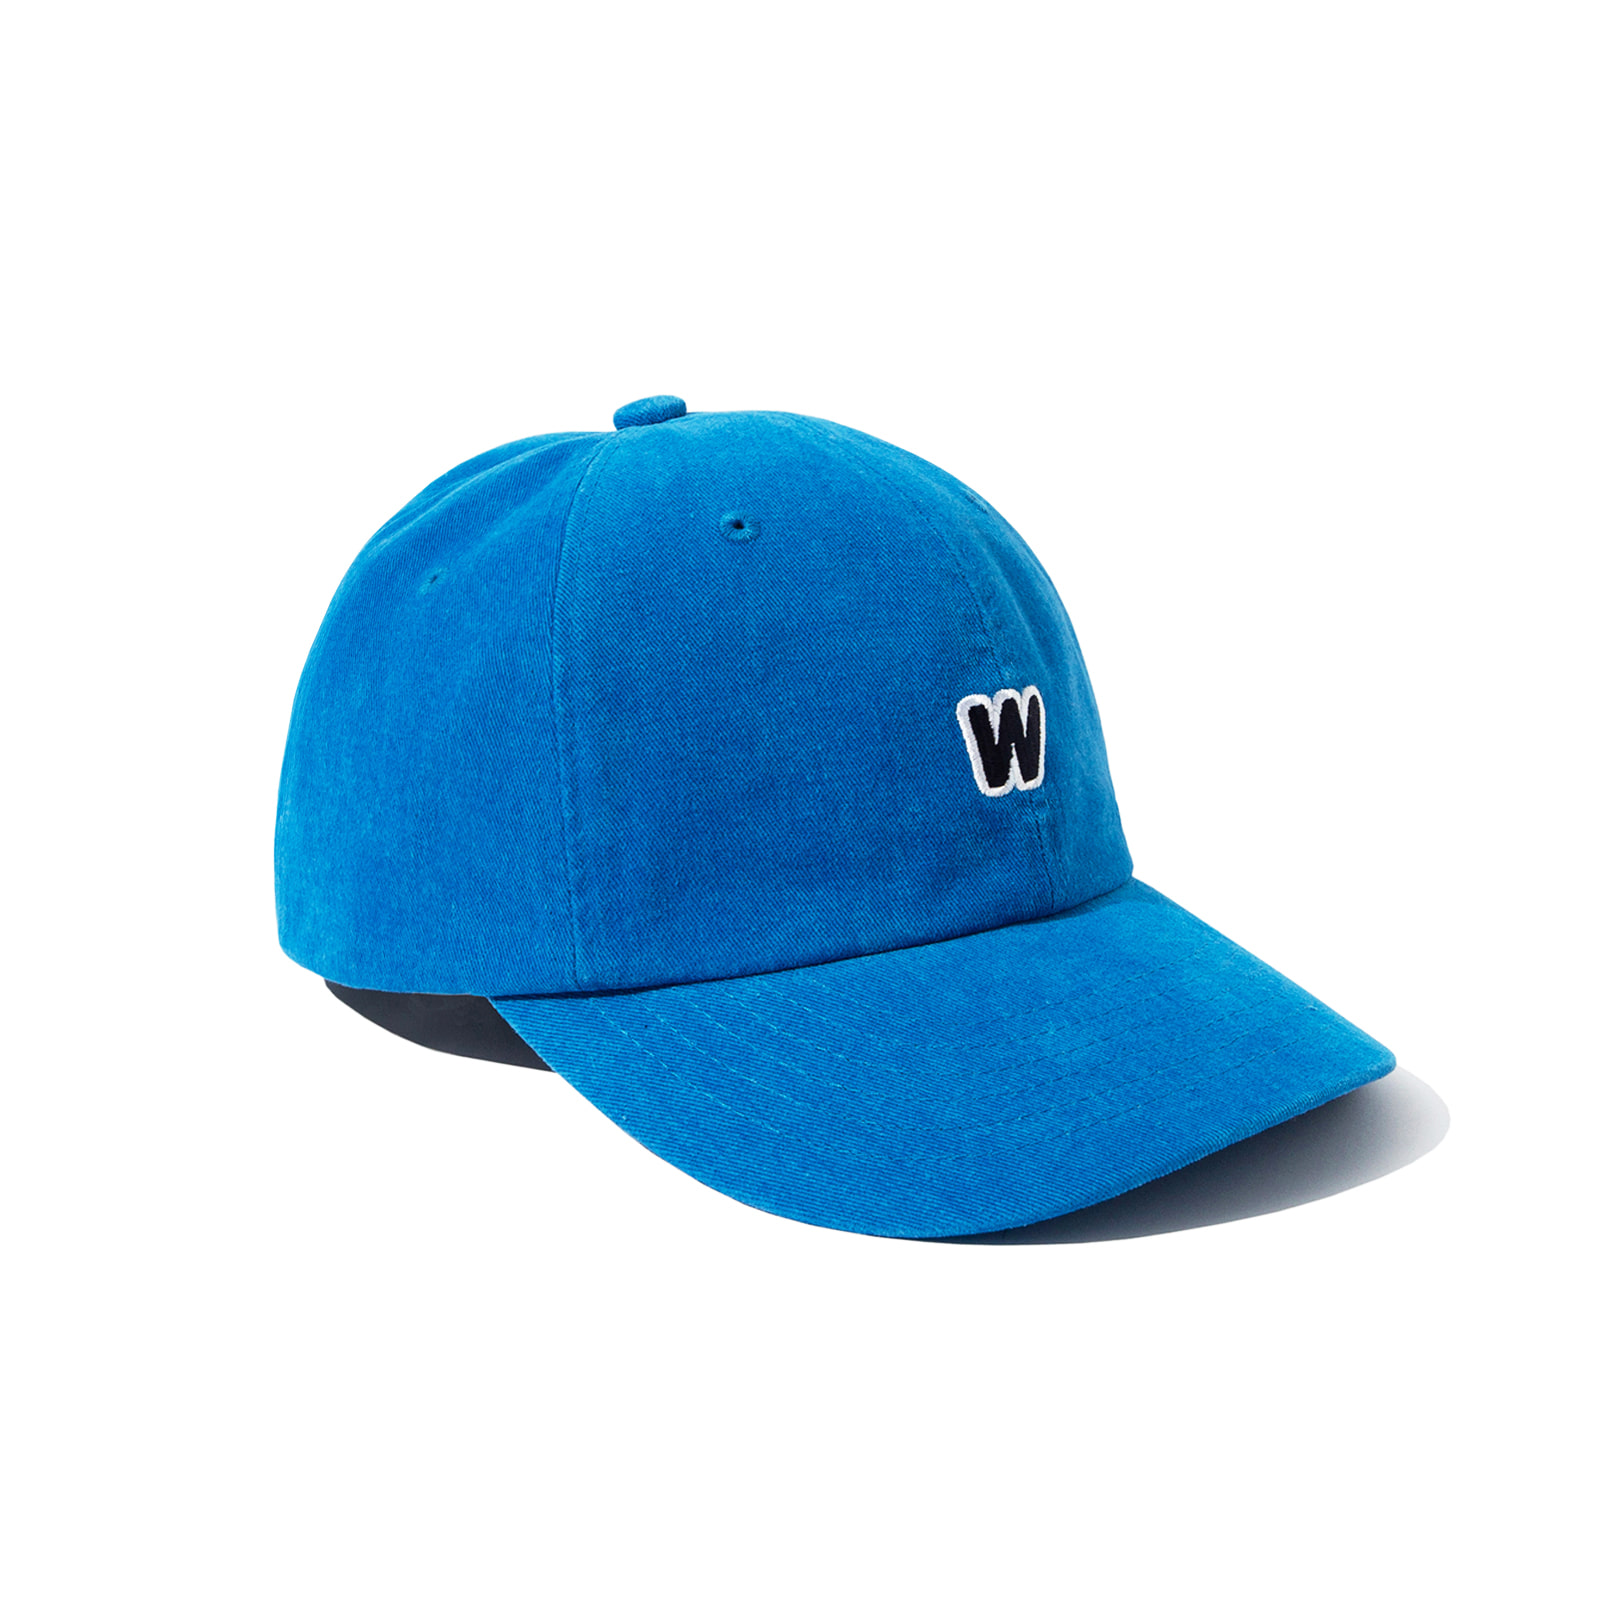 W LOGO CAP (BLUE)